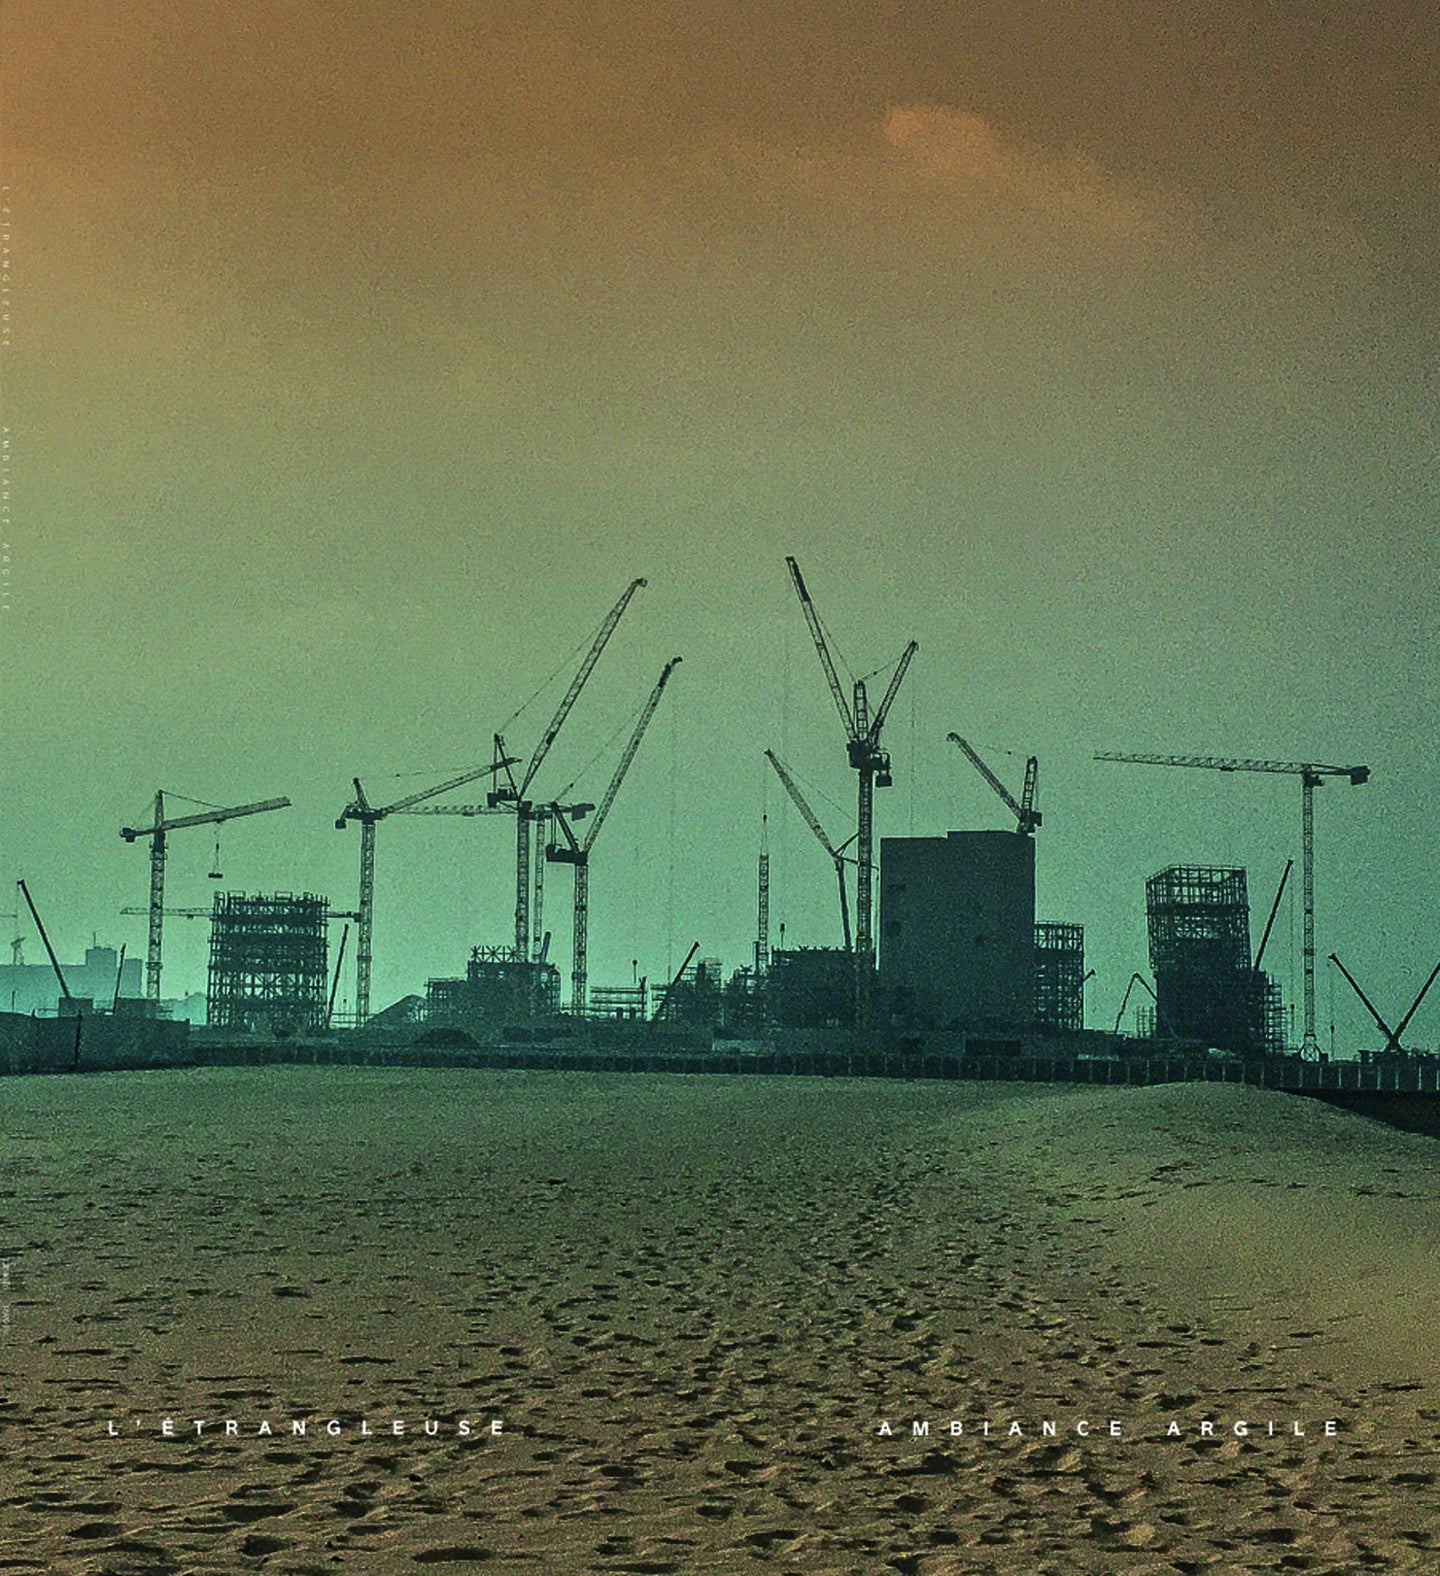 Pochette de : AMBIANCE ARGILE - ETRANGLEUSE (CD)